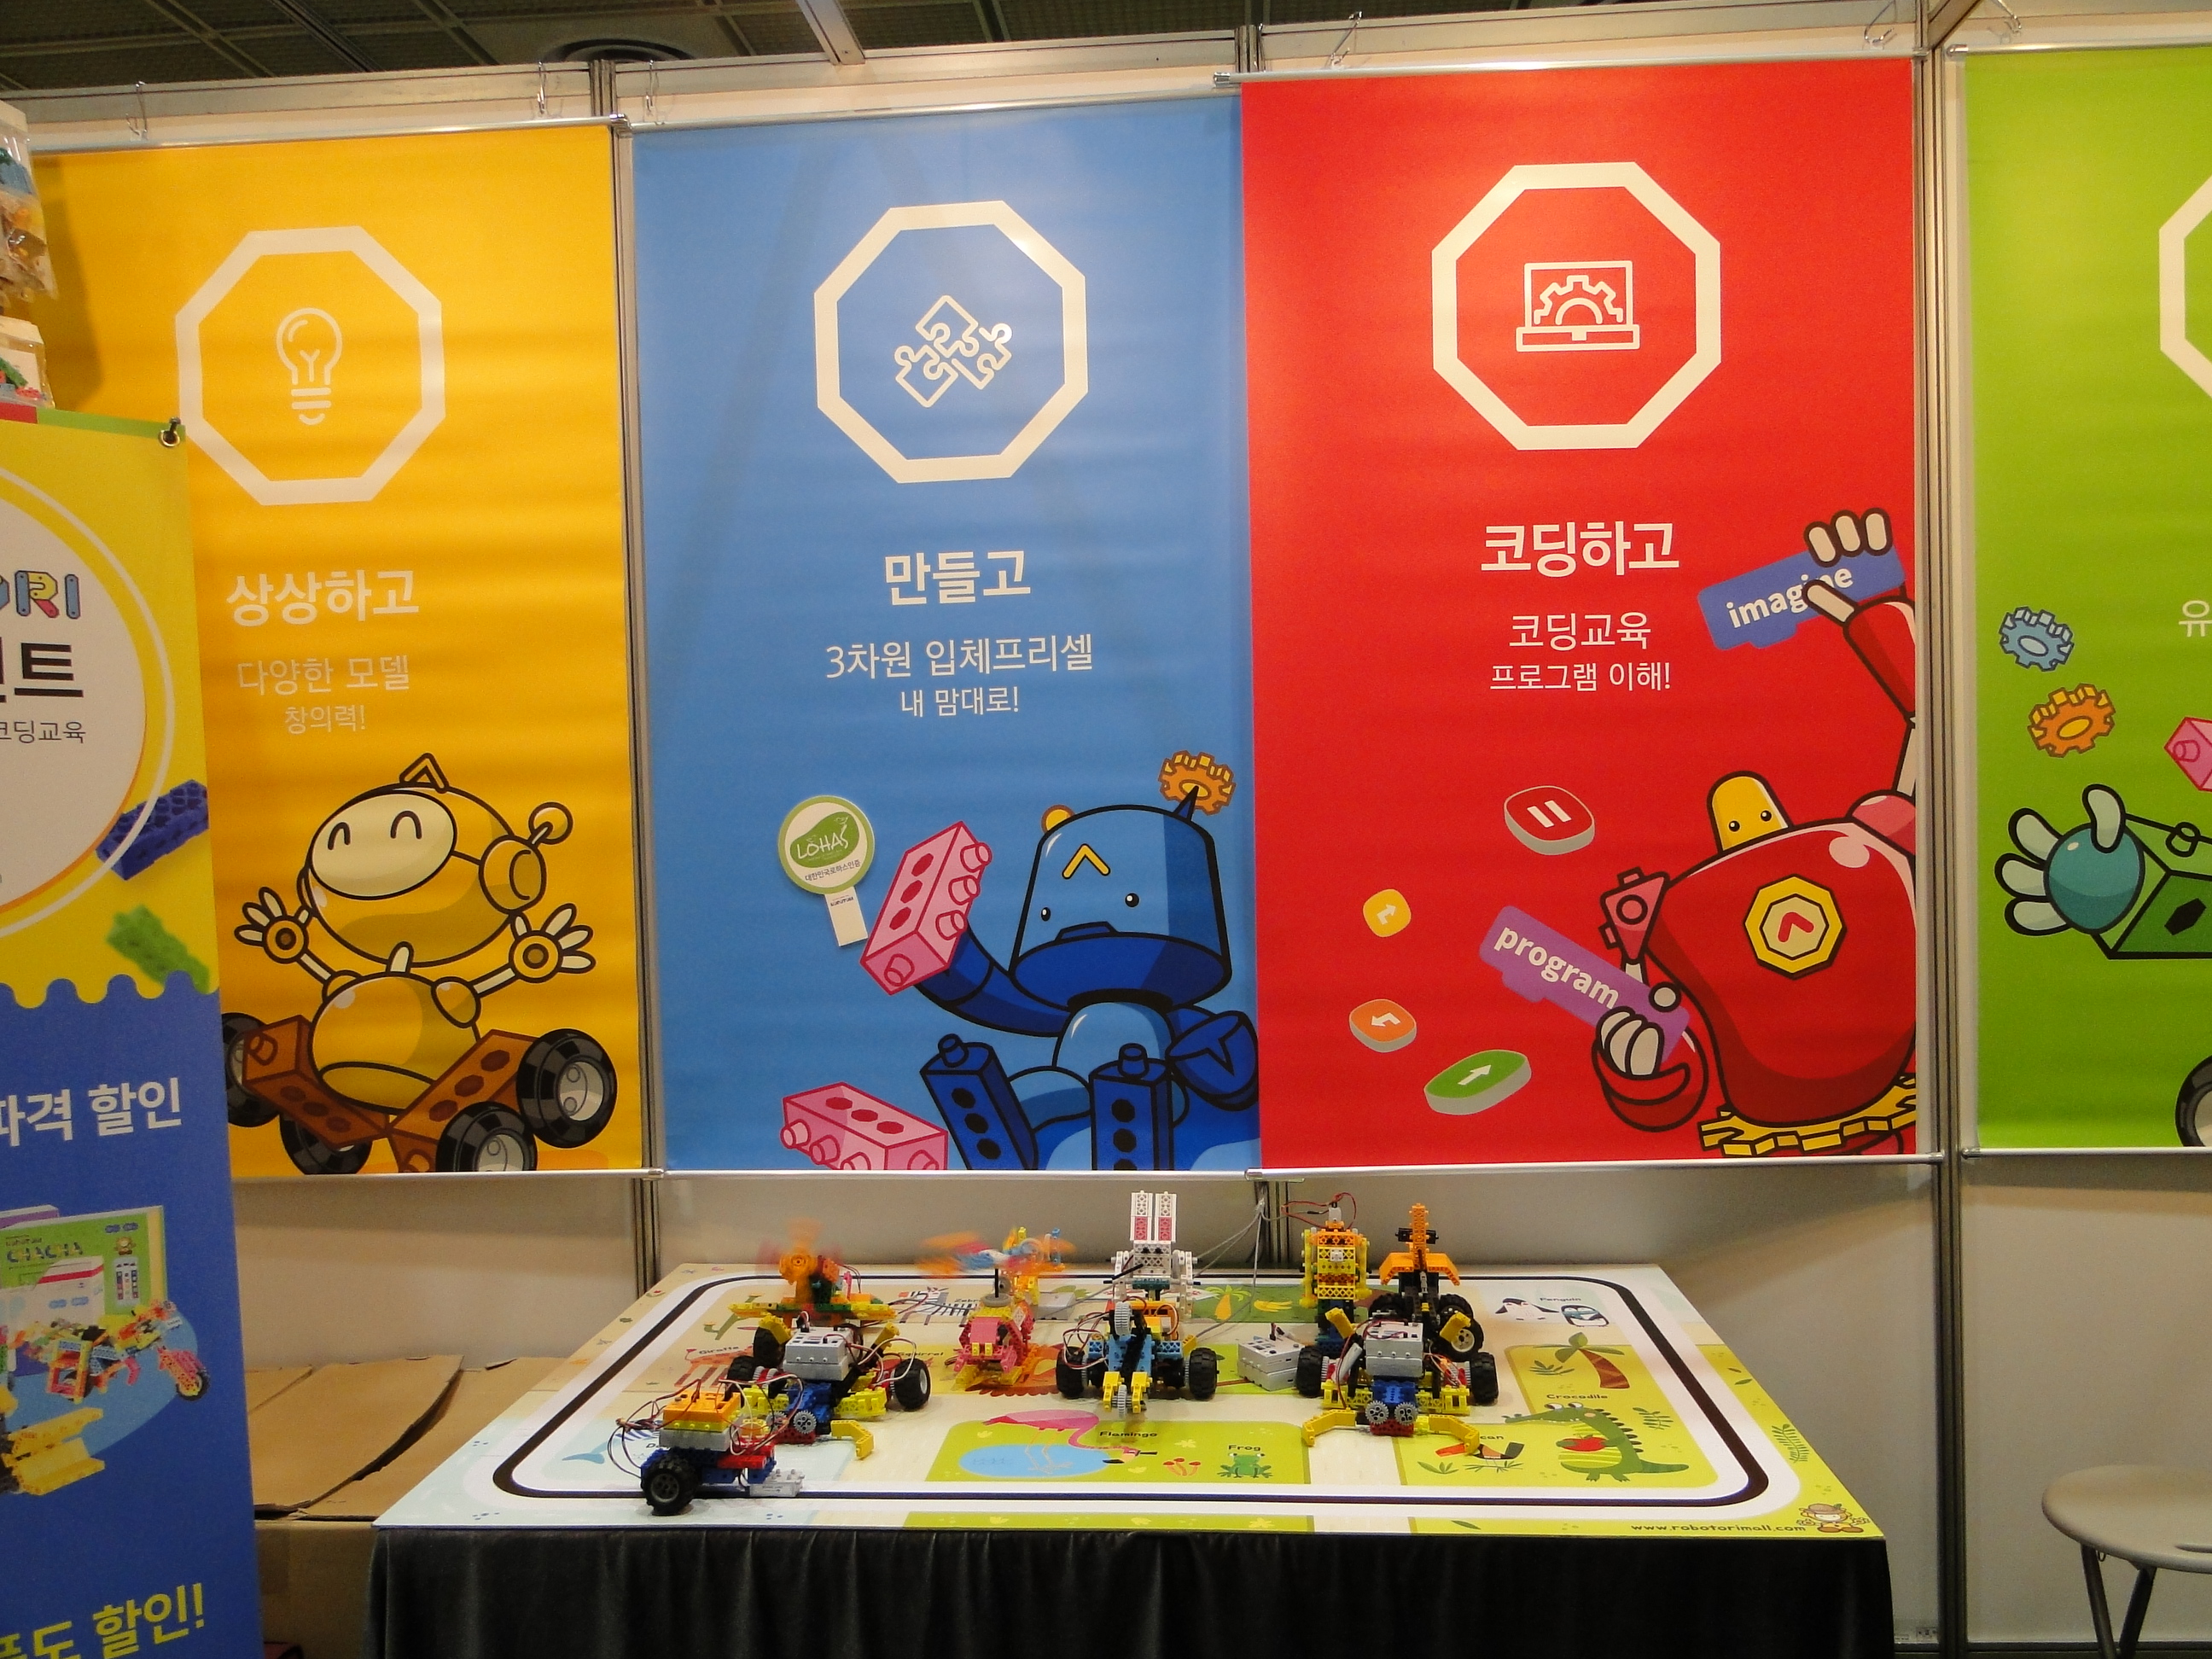 Robot Learning Games at the Ed Tech Fair E-Learning Korea